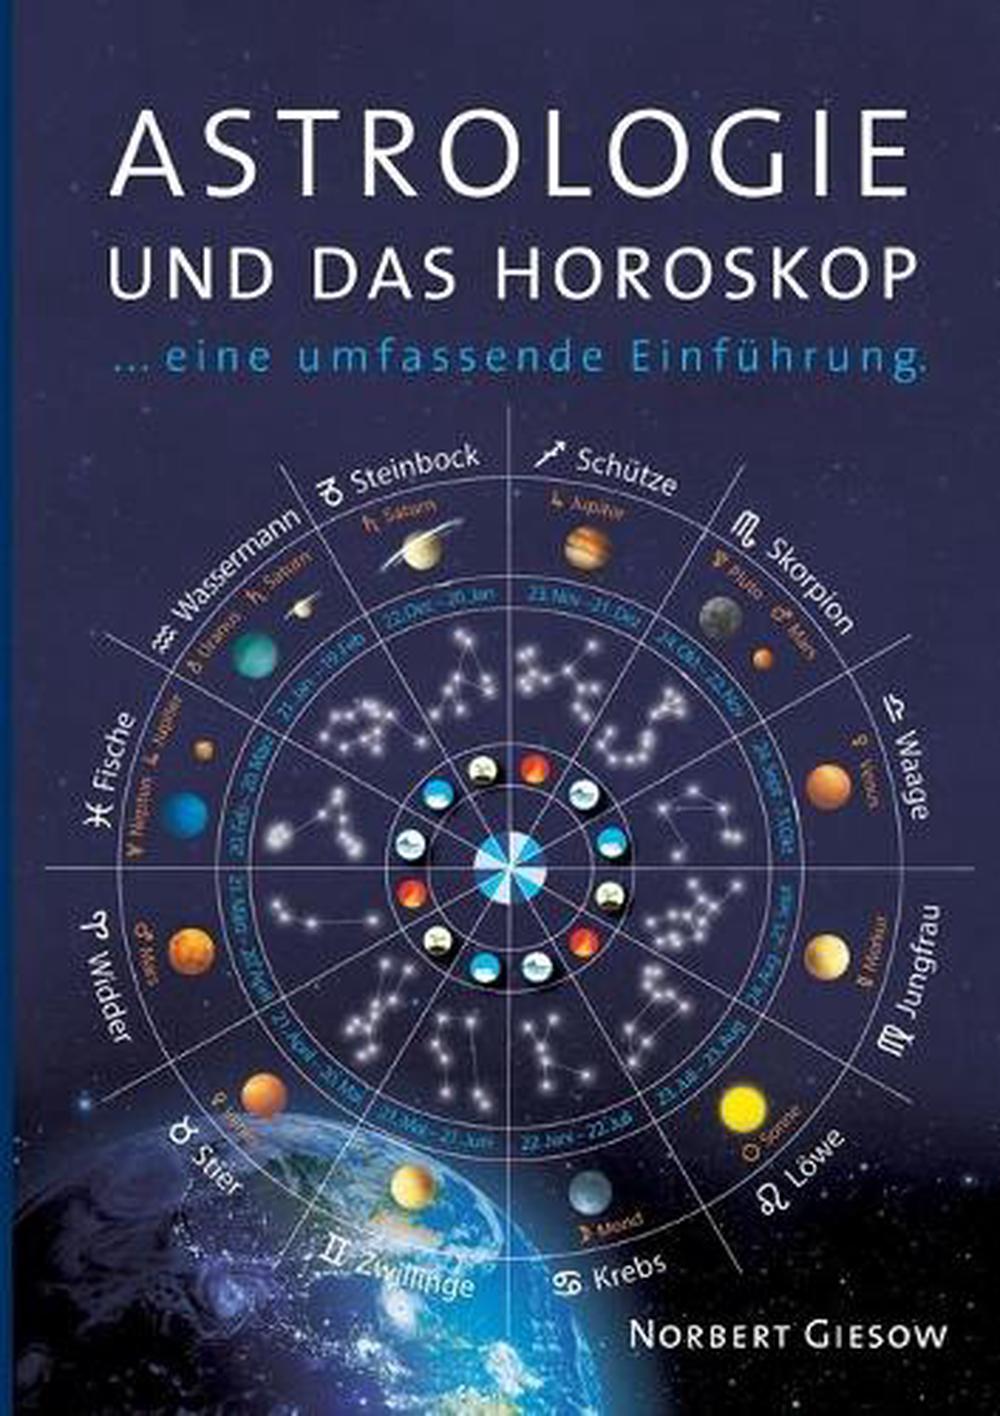 Astrologie Und Das Horoskop by Norbert Giesow (German) Paperback Book ...